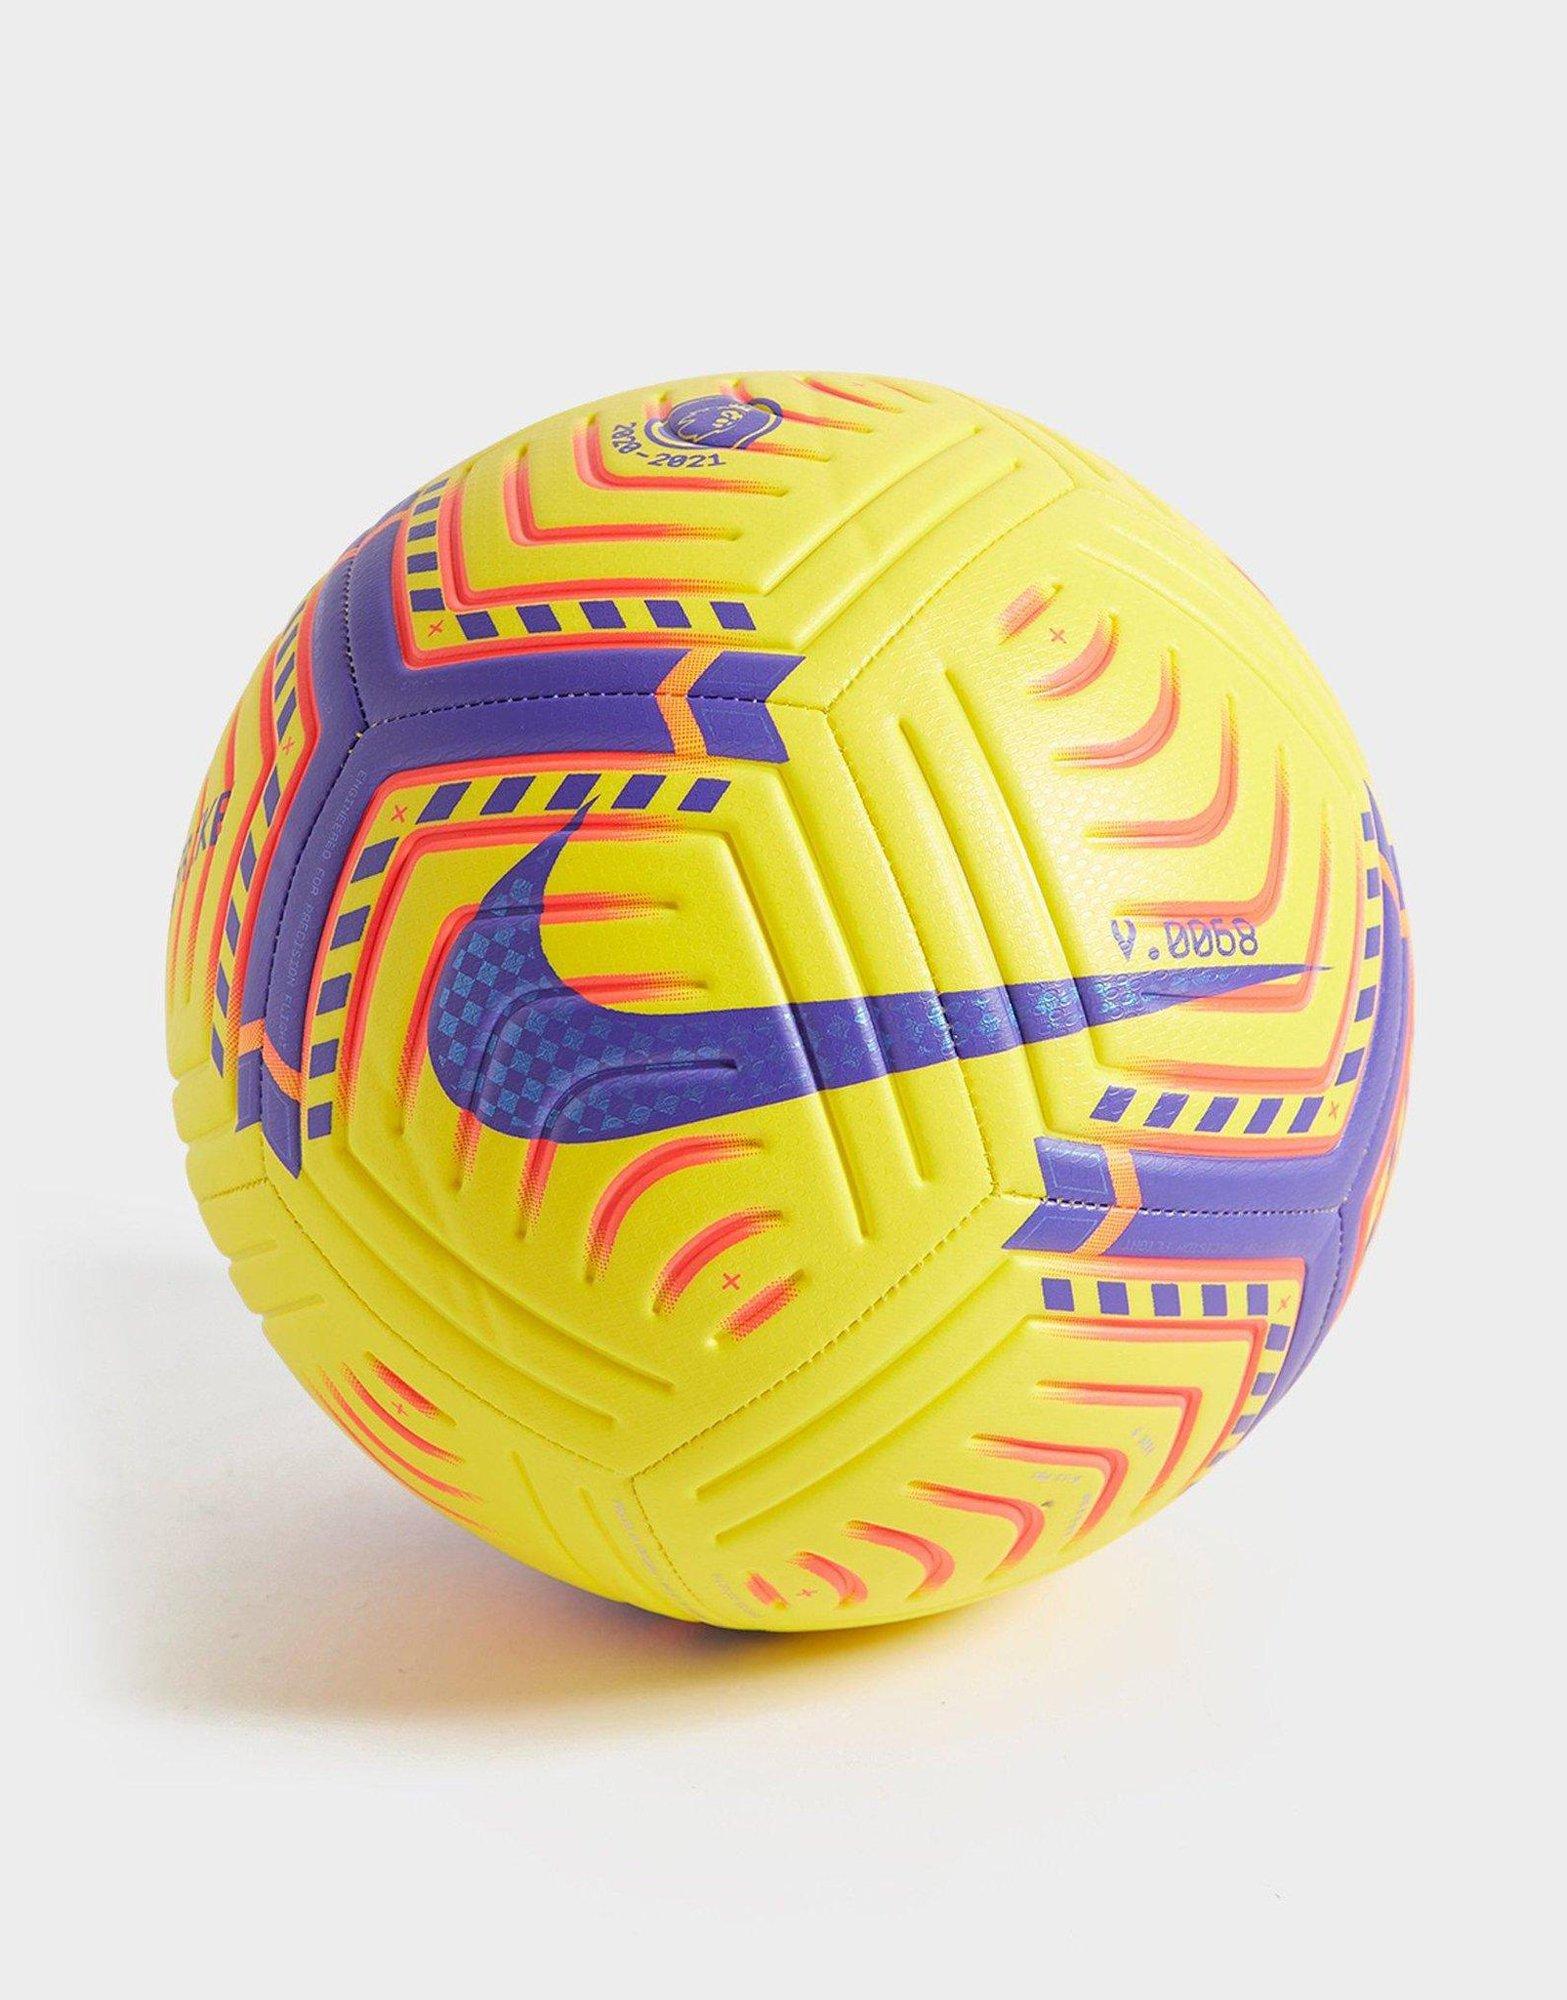 new premier league ball 2020